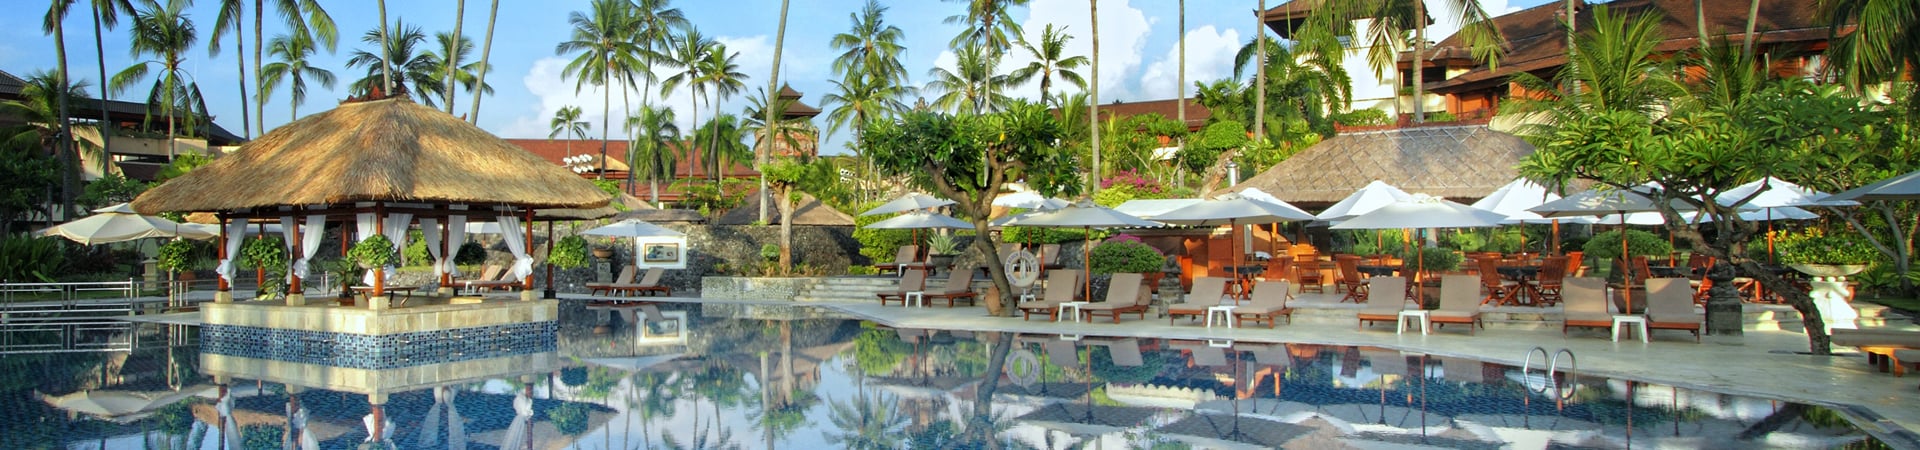 Image of Nusa Dua Beach Hotel